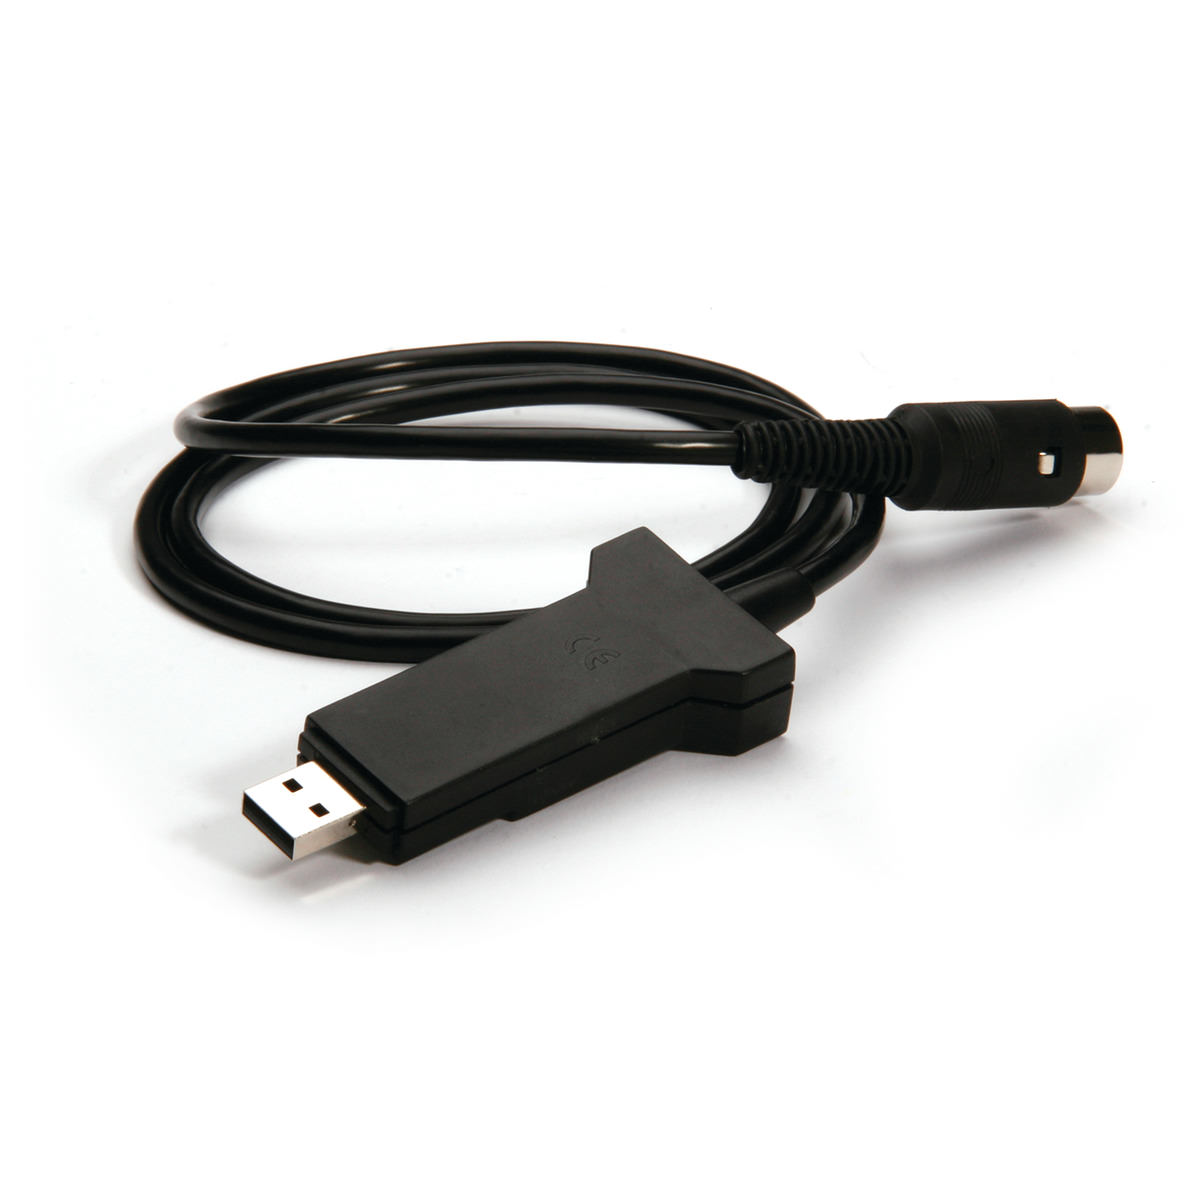 USB Interface Cable for HI9828 Multiparameter Portable Meter - HI7698281